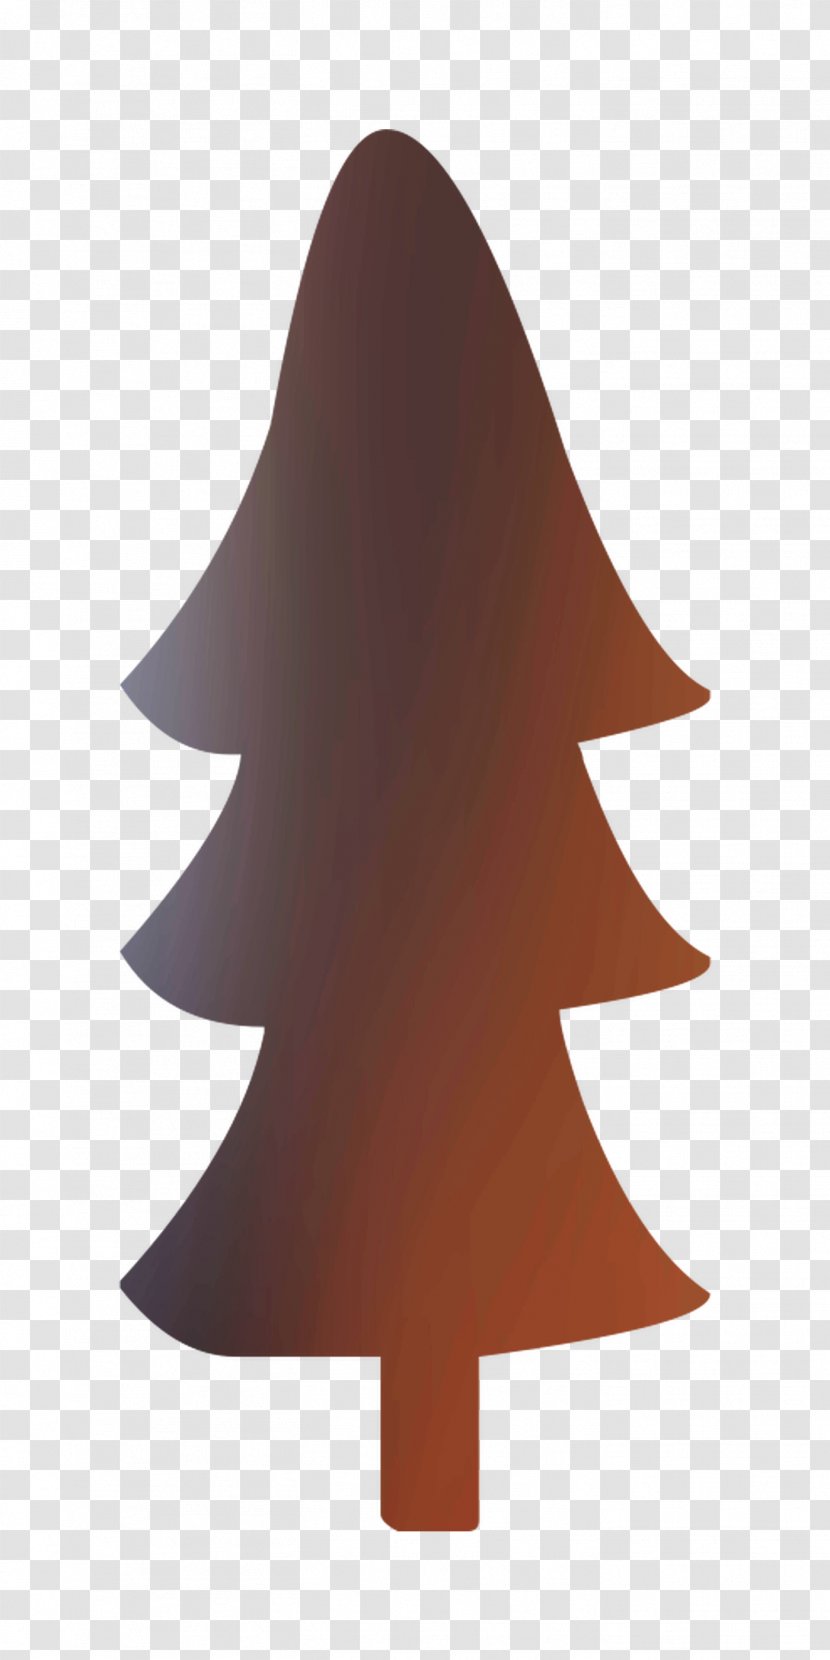 Product Design Tree - Pine - Christmas Decoration Transparent PNG